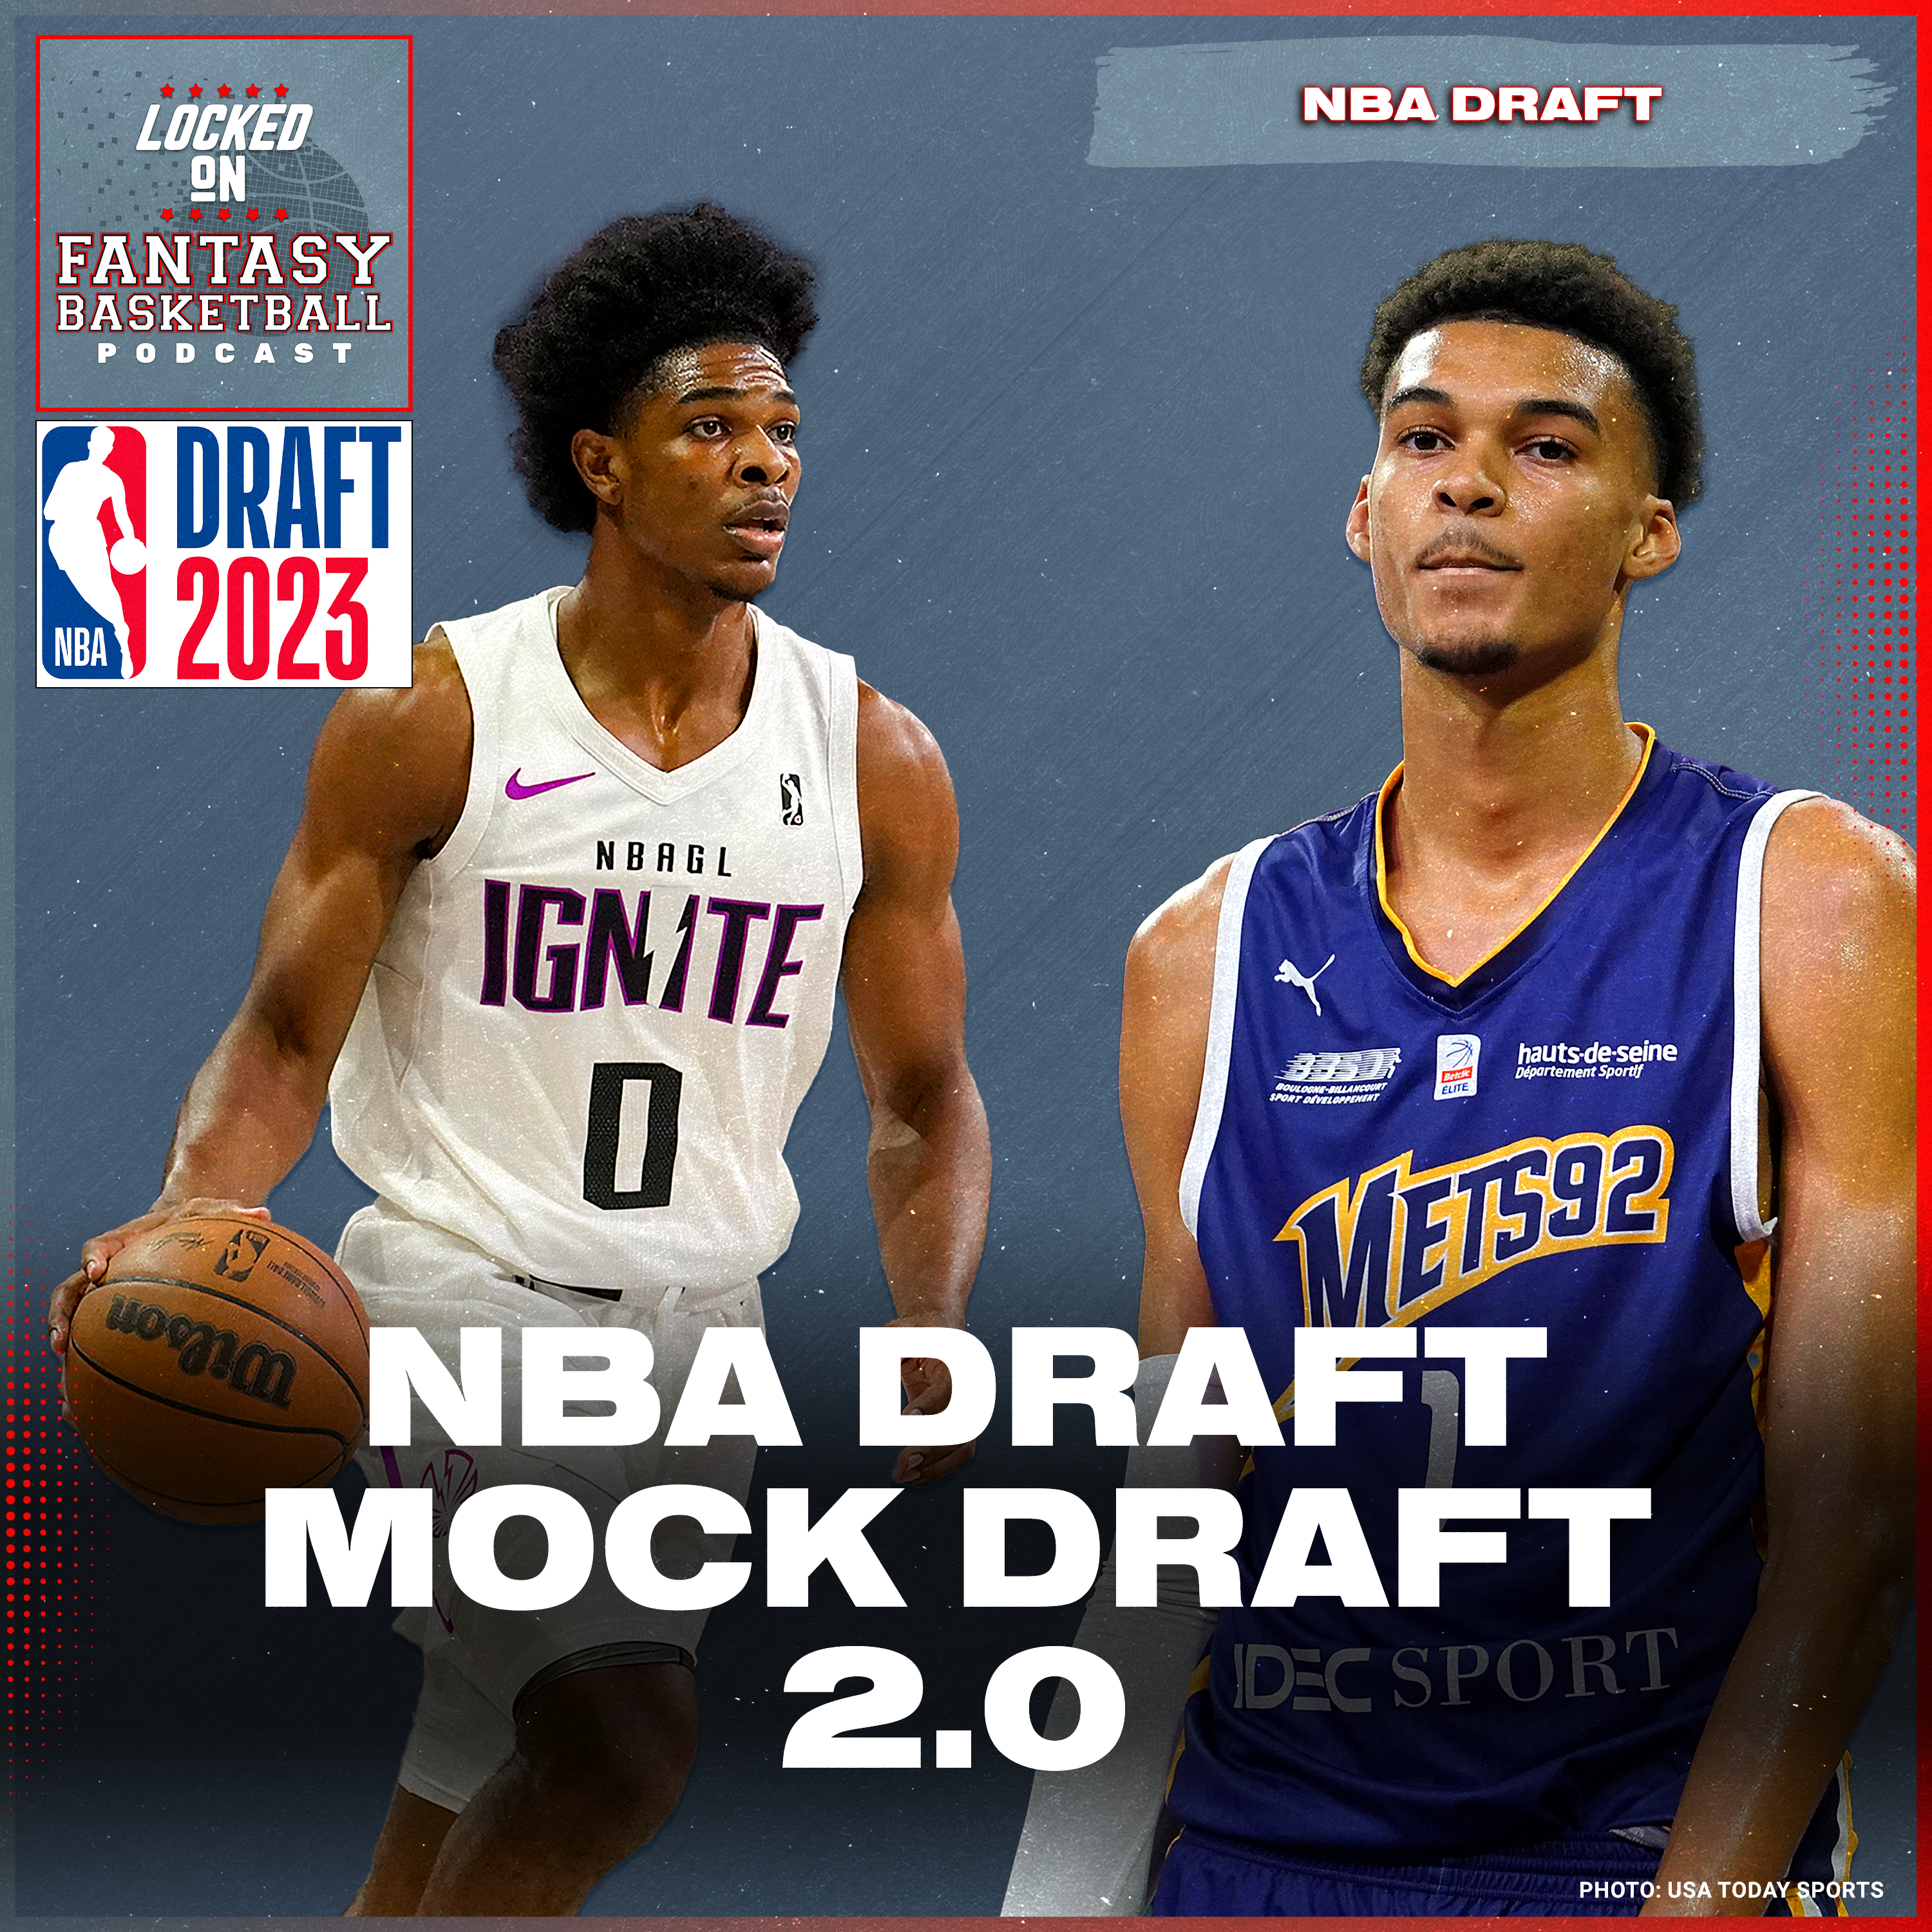 Atlanta Hawks pick Kobe Bufkin, Seth Lundy in 2023 NBA Draft